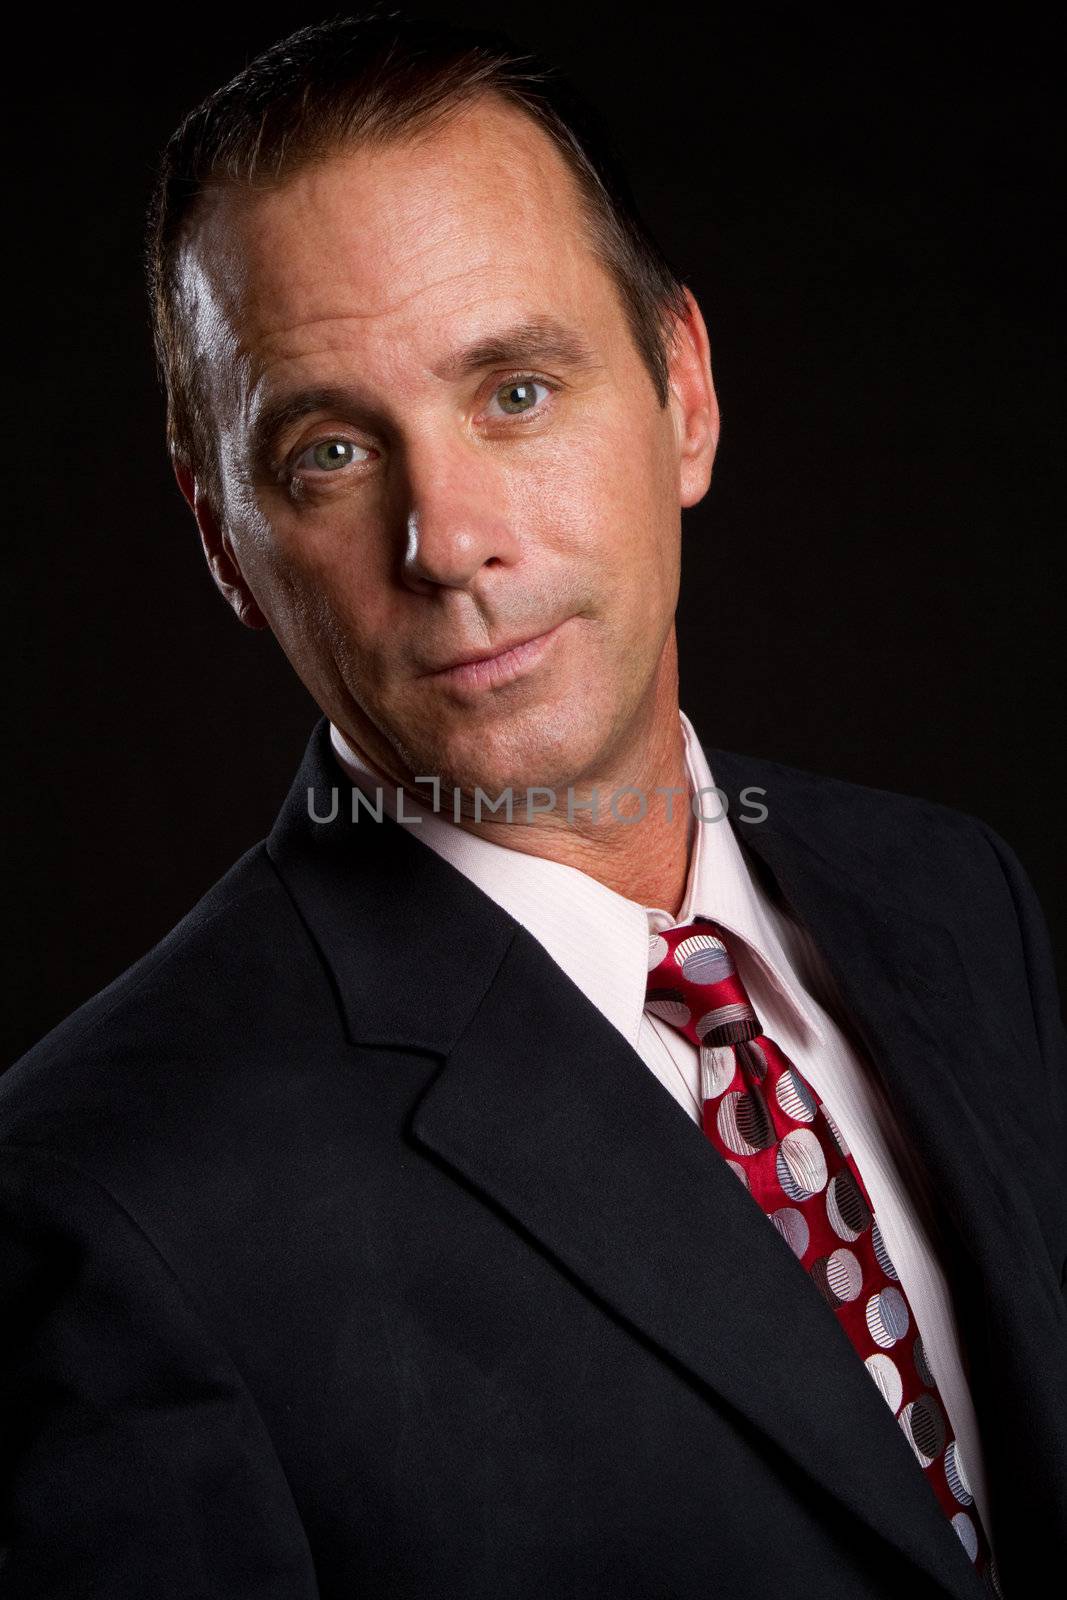 Businessman headshot wearing suit tie